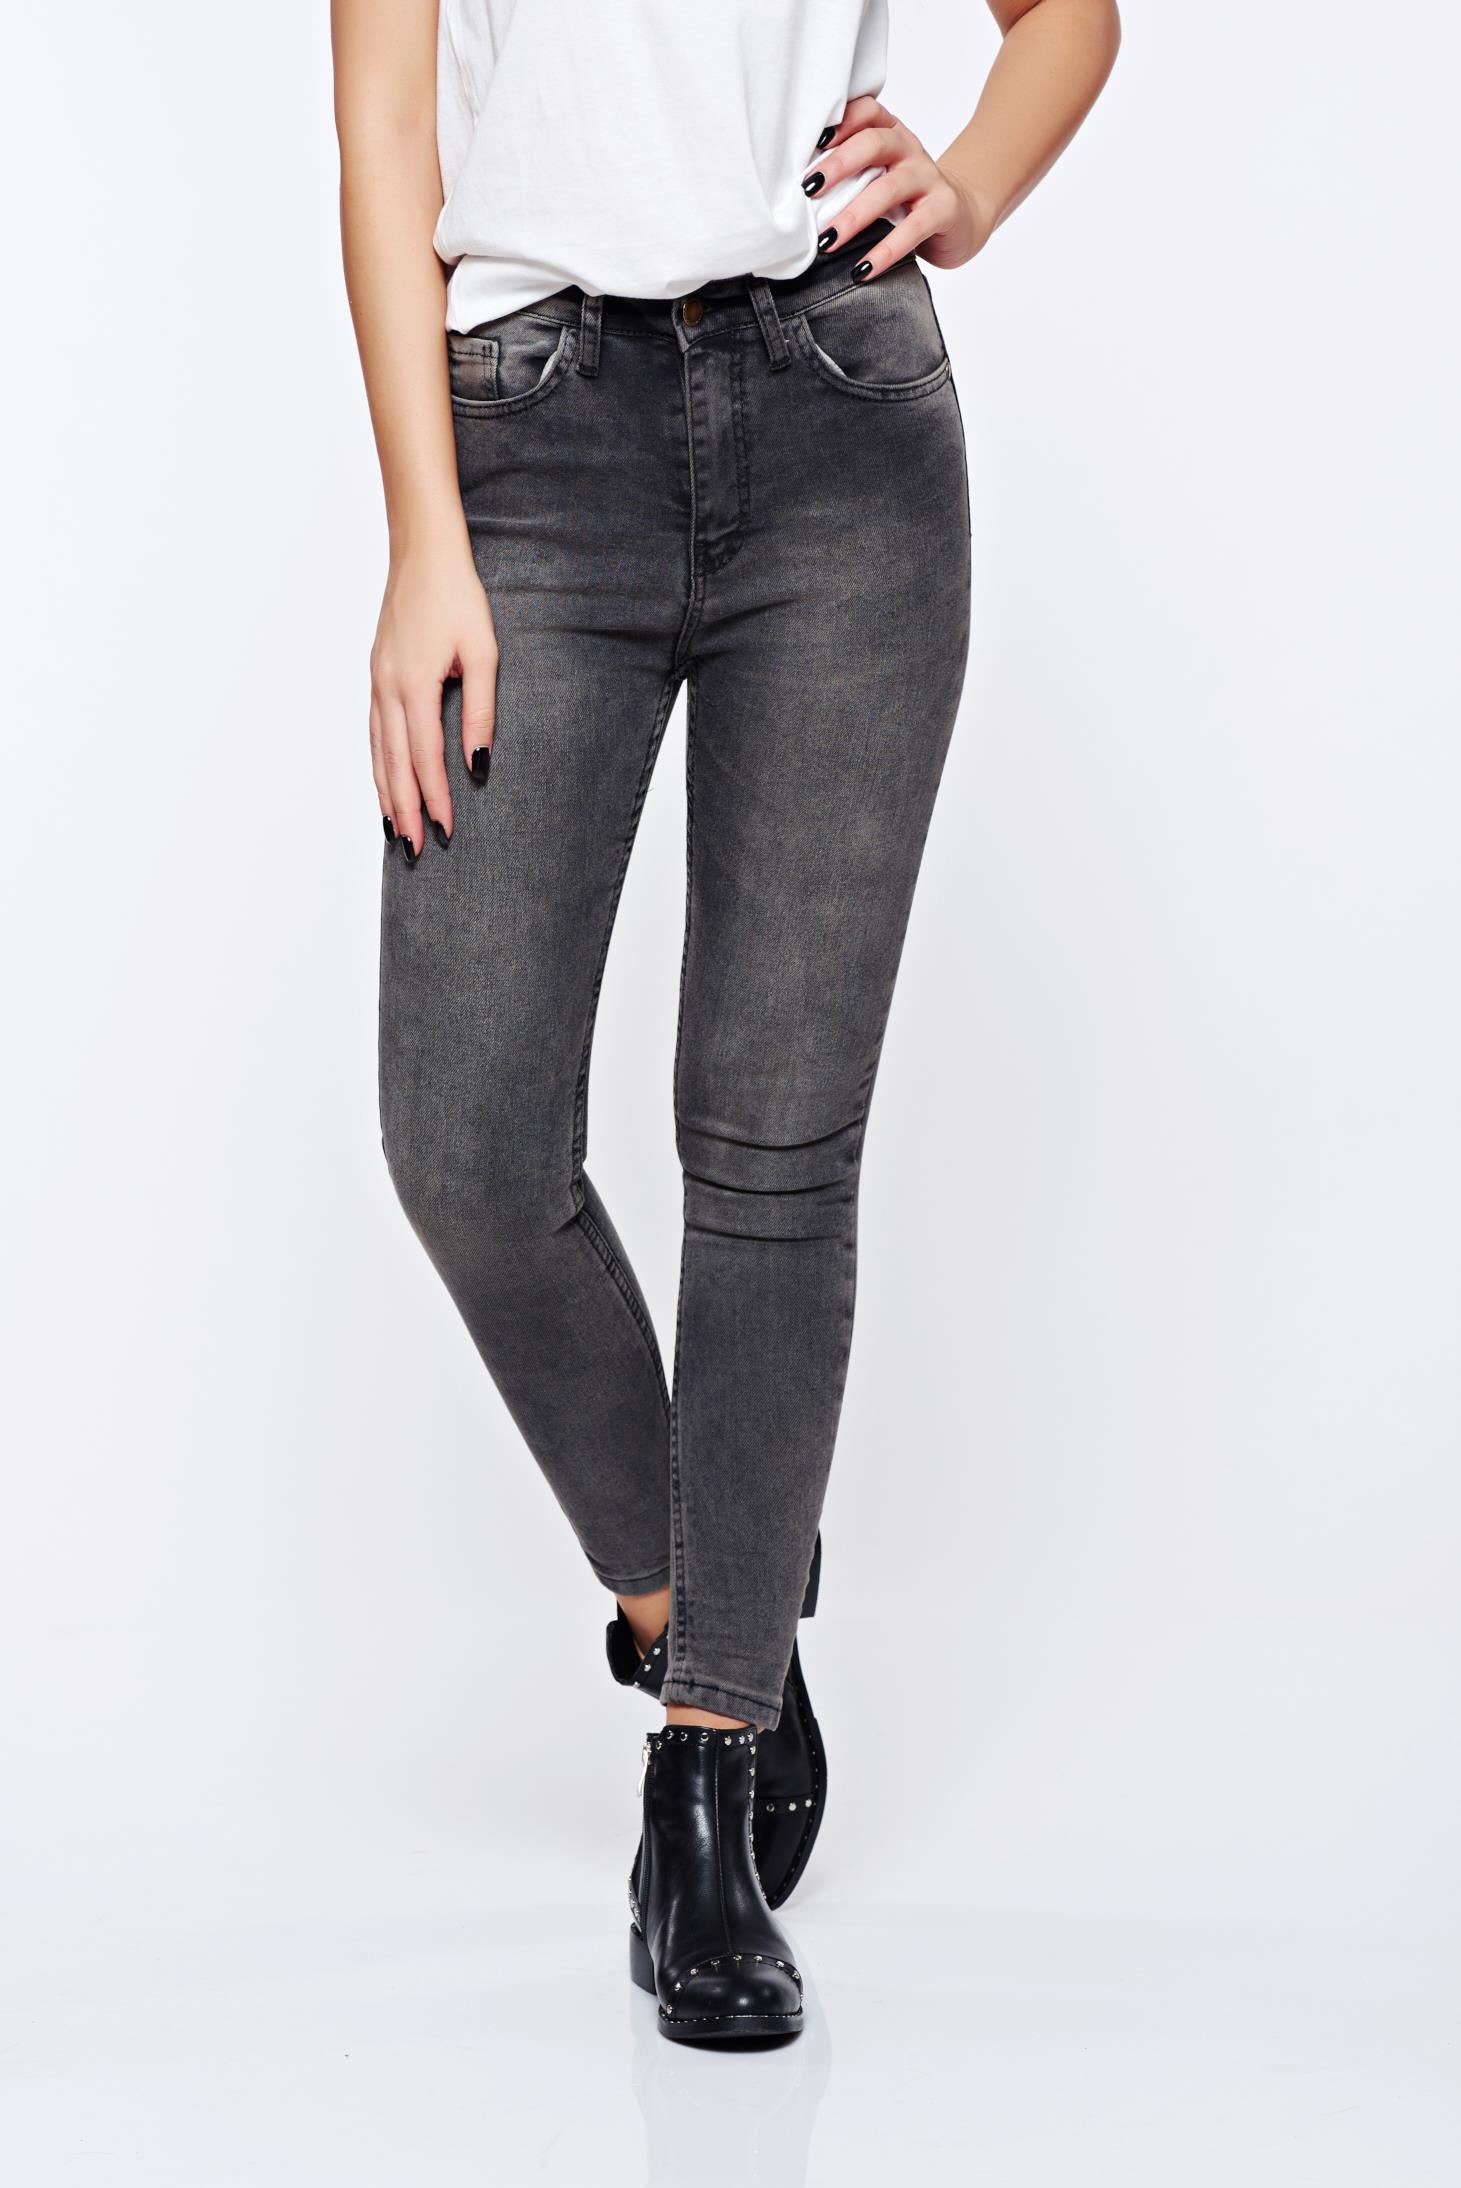 Top Secret grey jeans casual cotton with medium waist